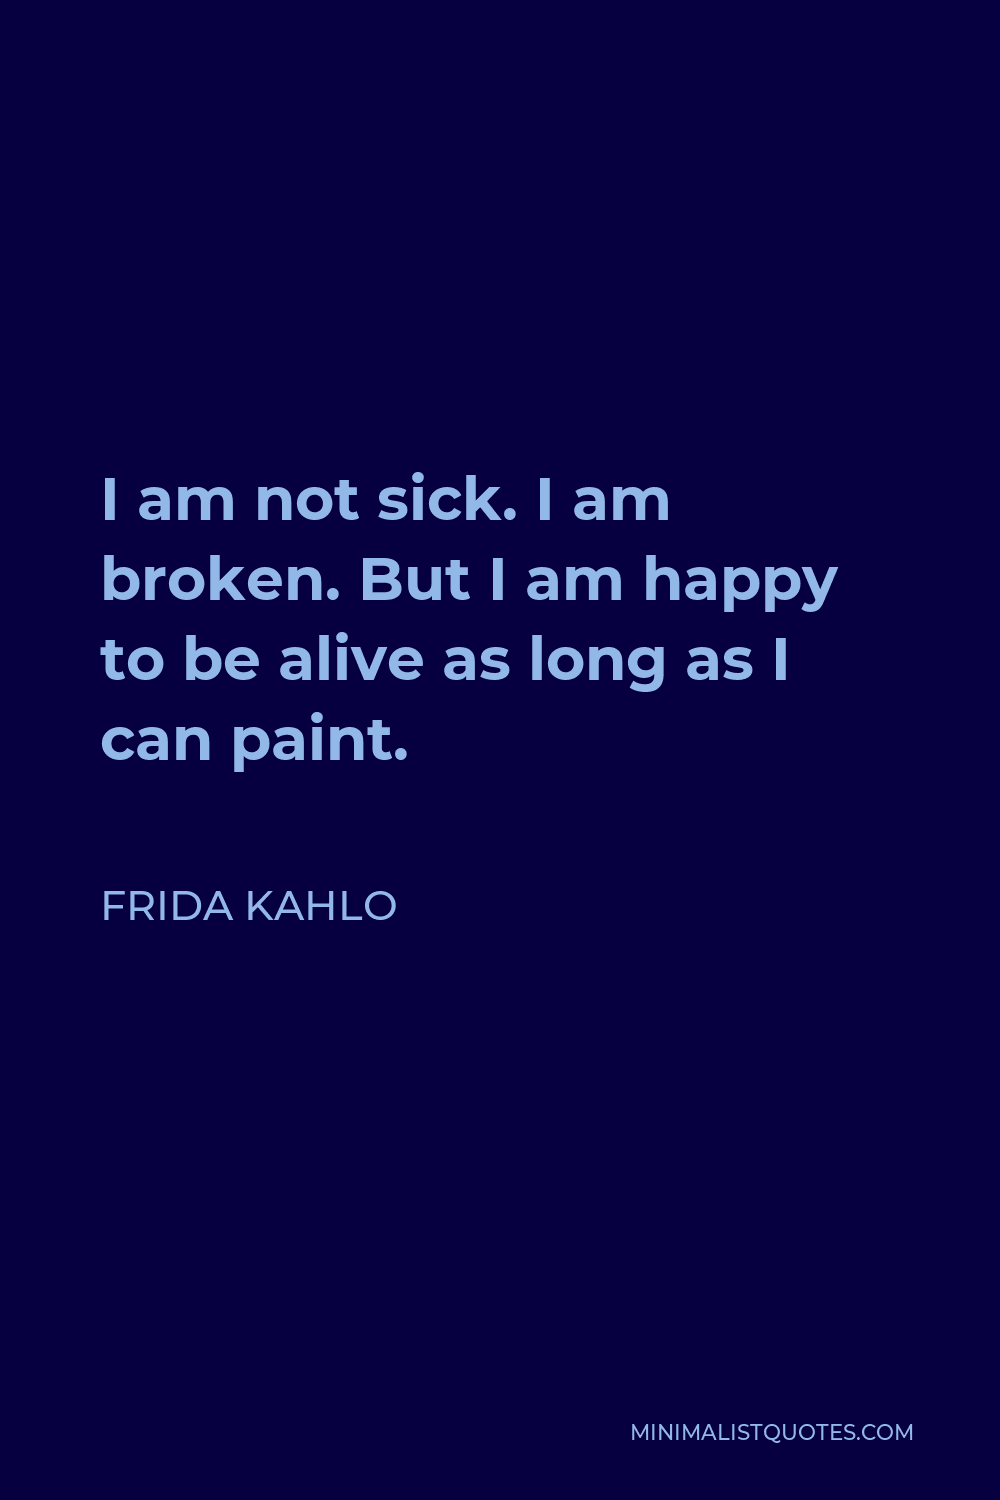 Frida Kahlo Quote: I am not sick. I am broken. But I am happy to ...